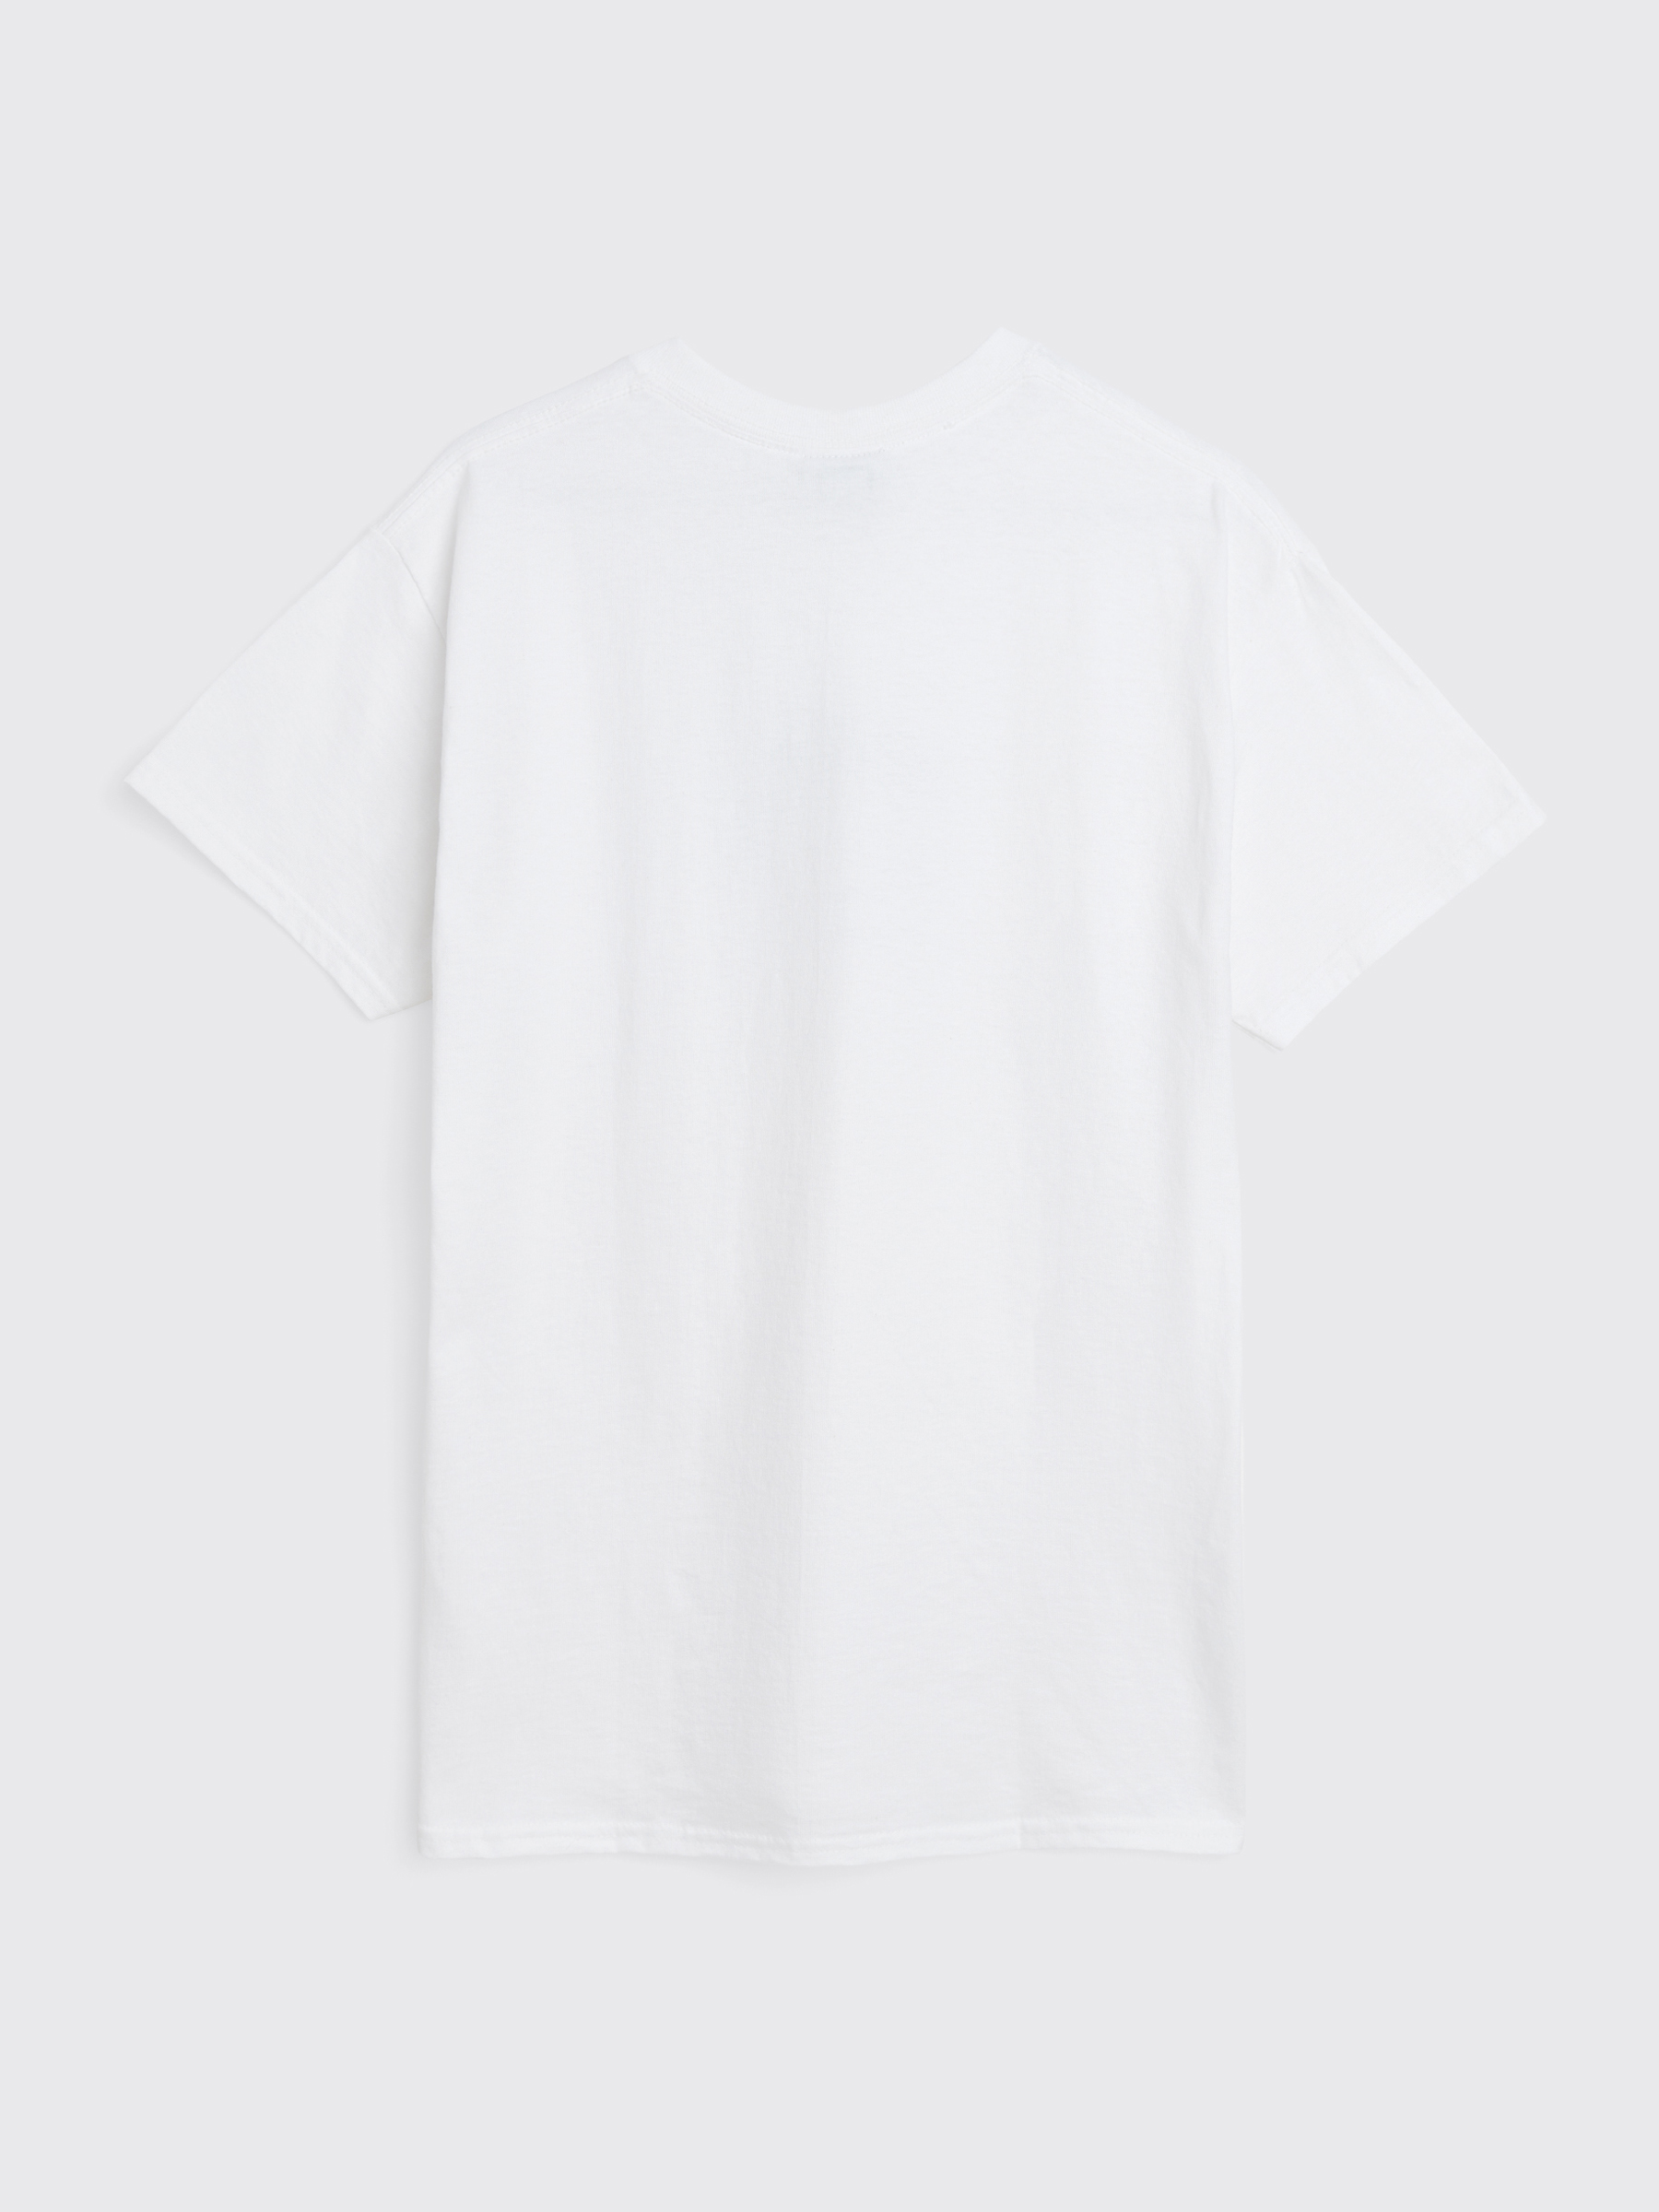 Très Bien - Sci-Fi Fantasy Xerox T-shirt White